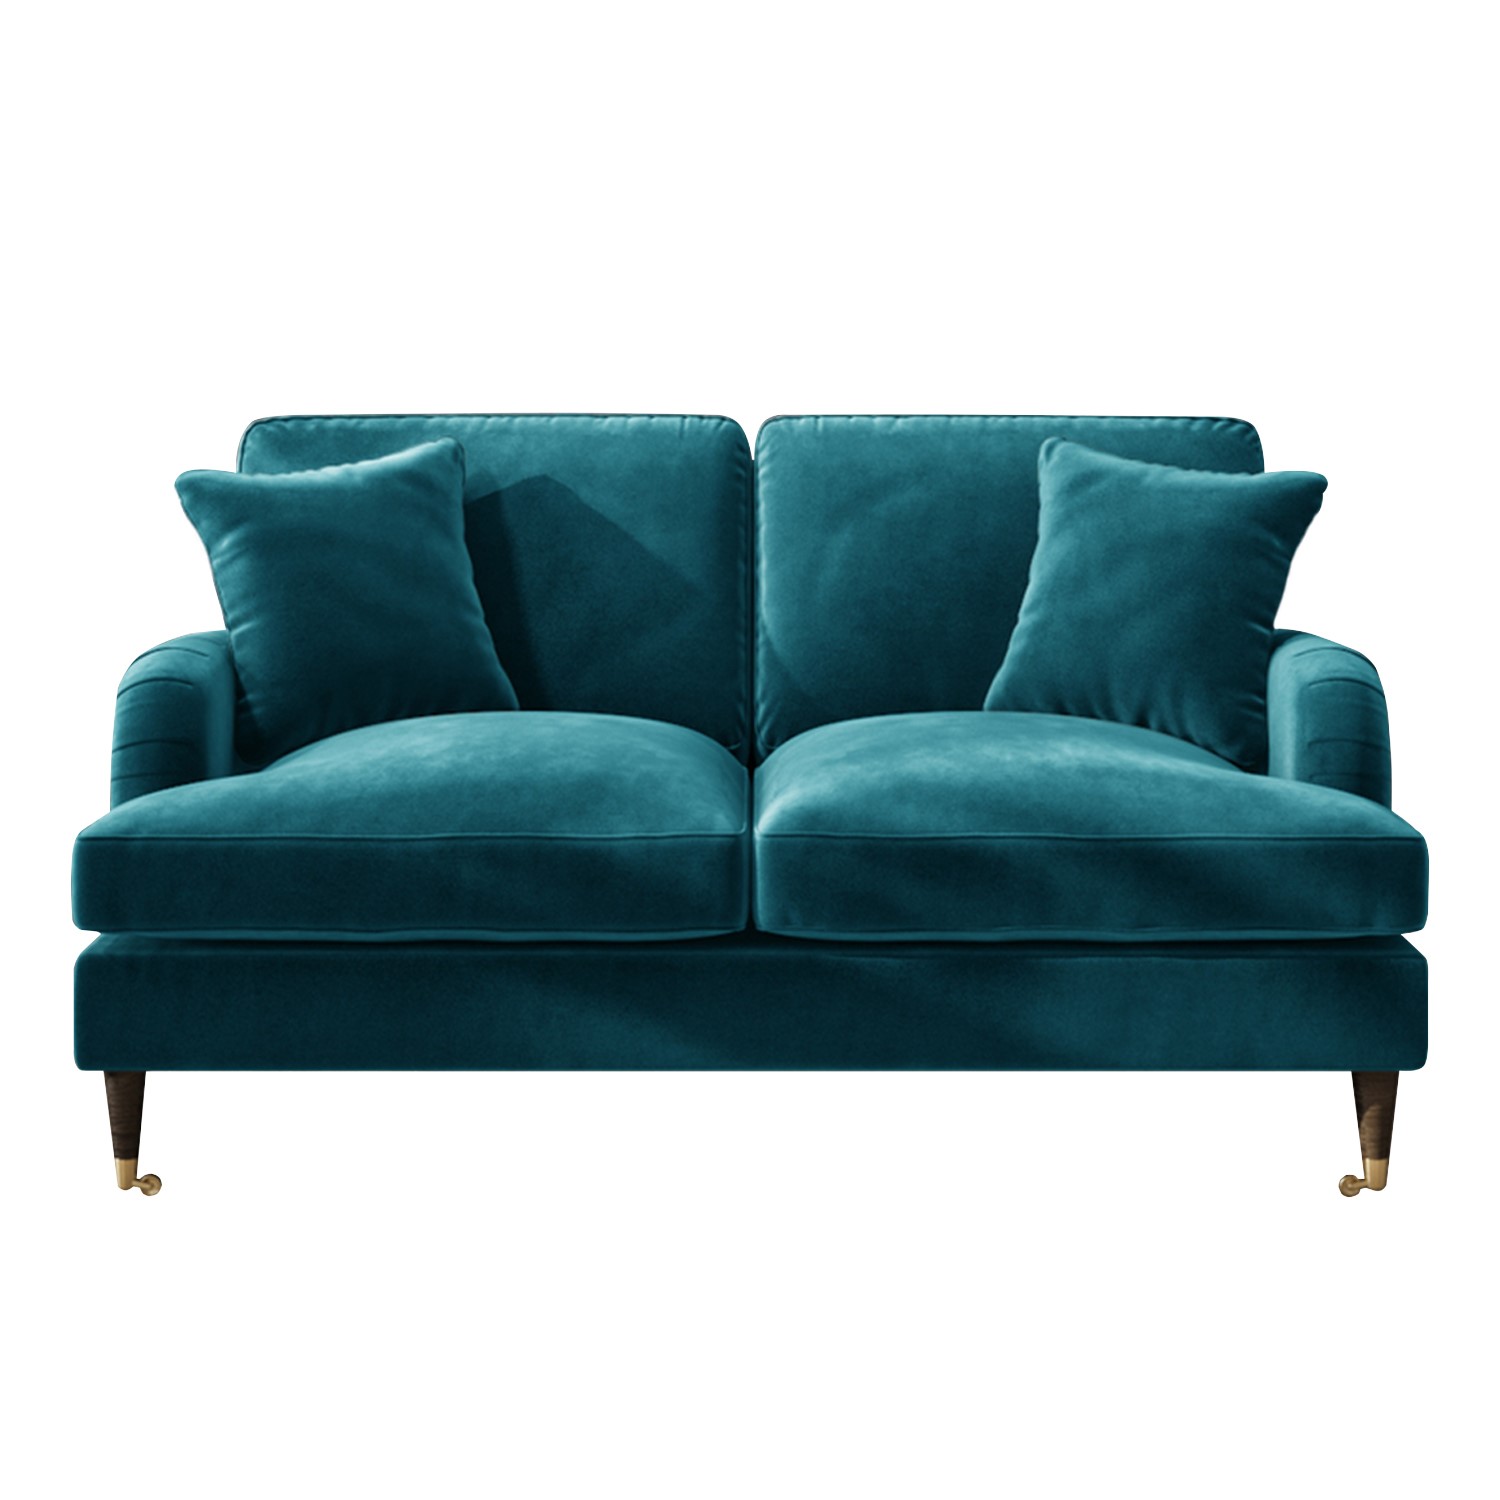 Teal Velvet 2 Seater Sofa - Payton - Furniture123